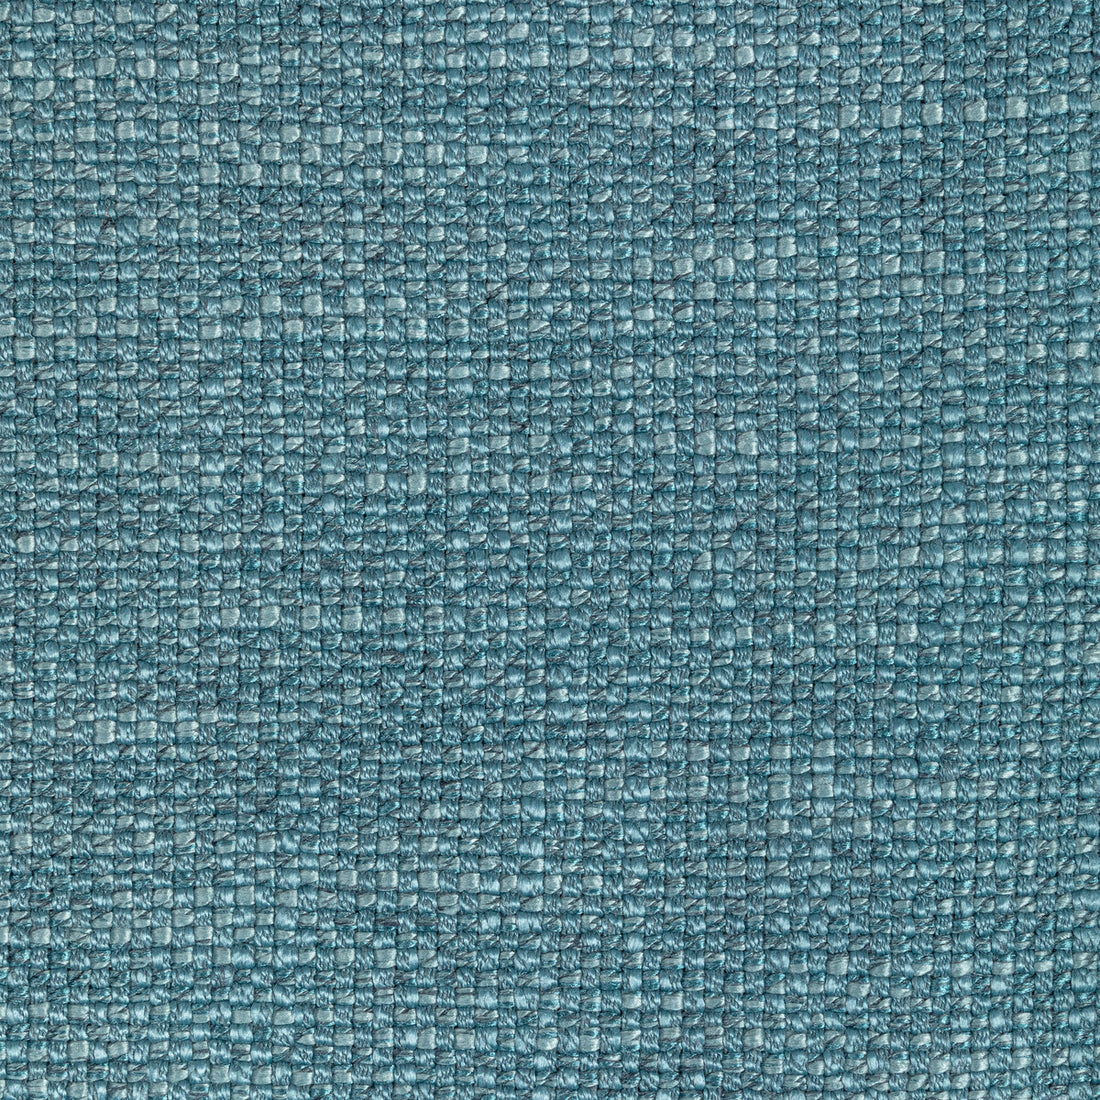 Kravet Design fabric in 36594-155 color - pattern 36594.155.0 - by Kravet Design in the Performance Kravetarmor collection